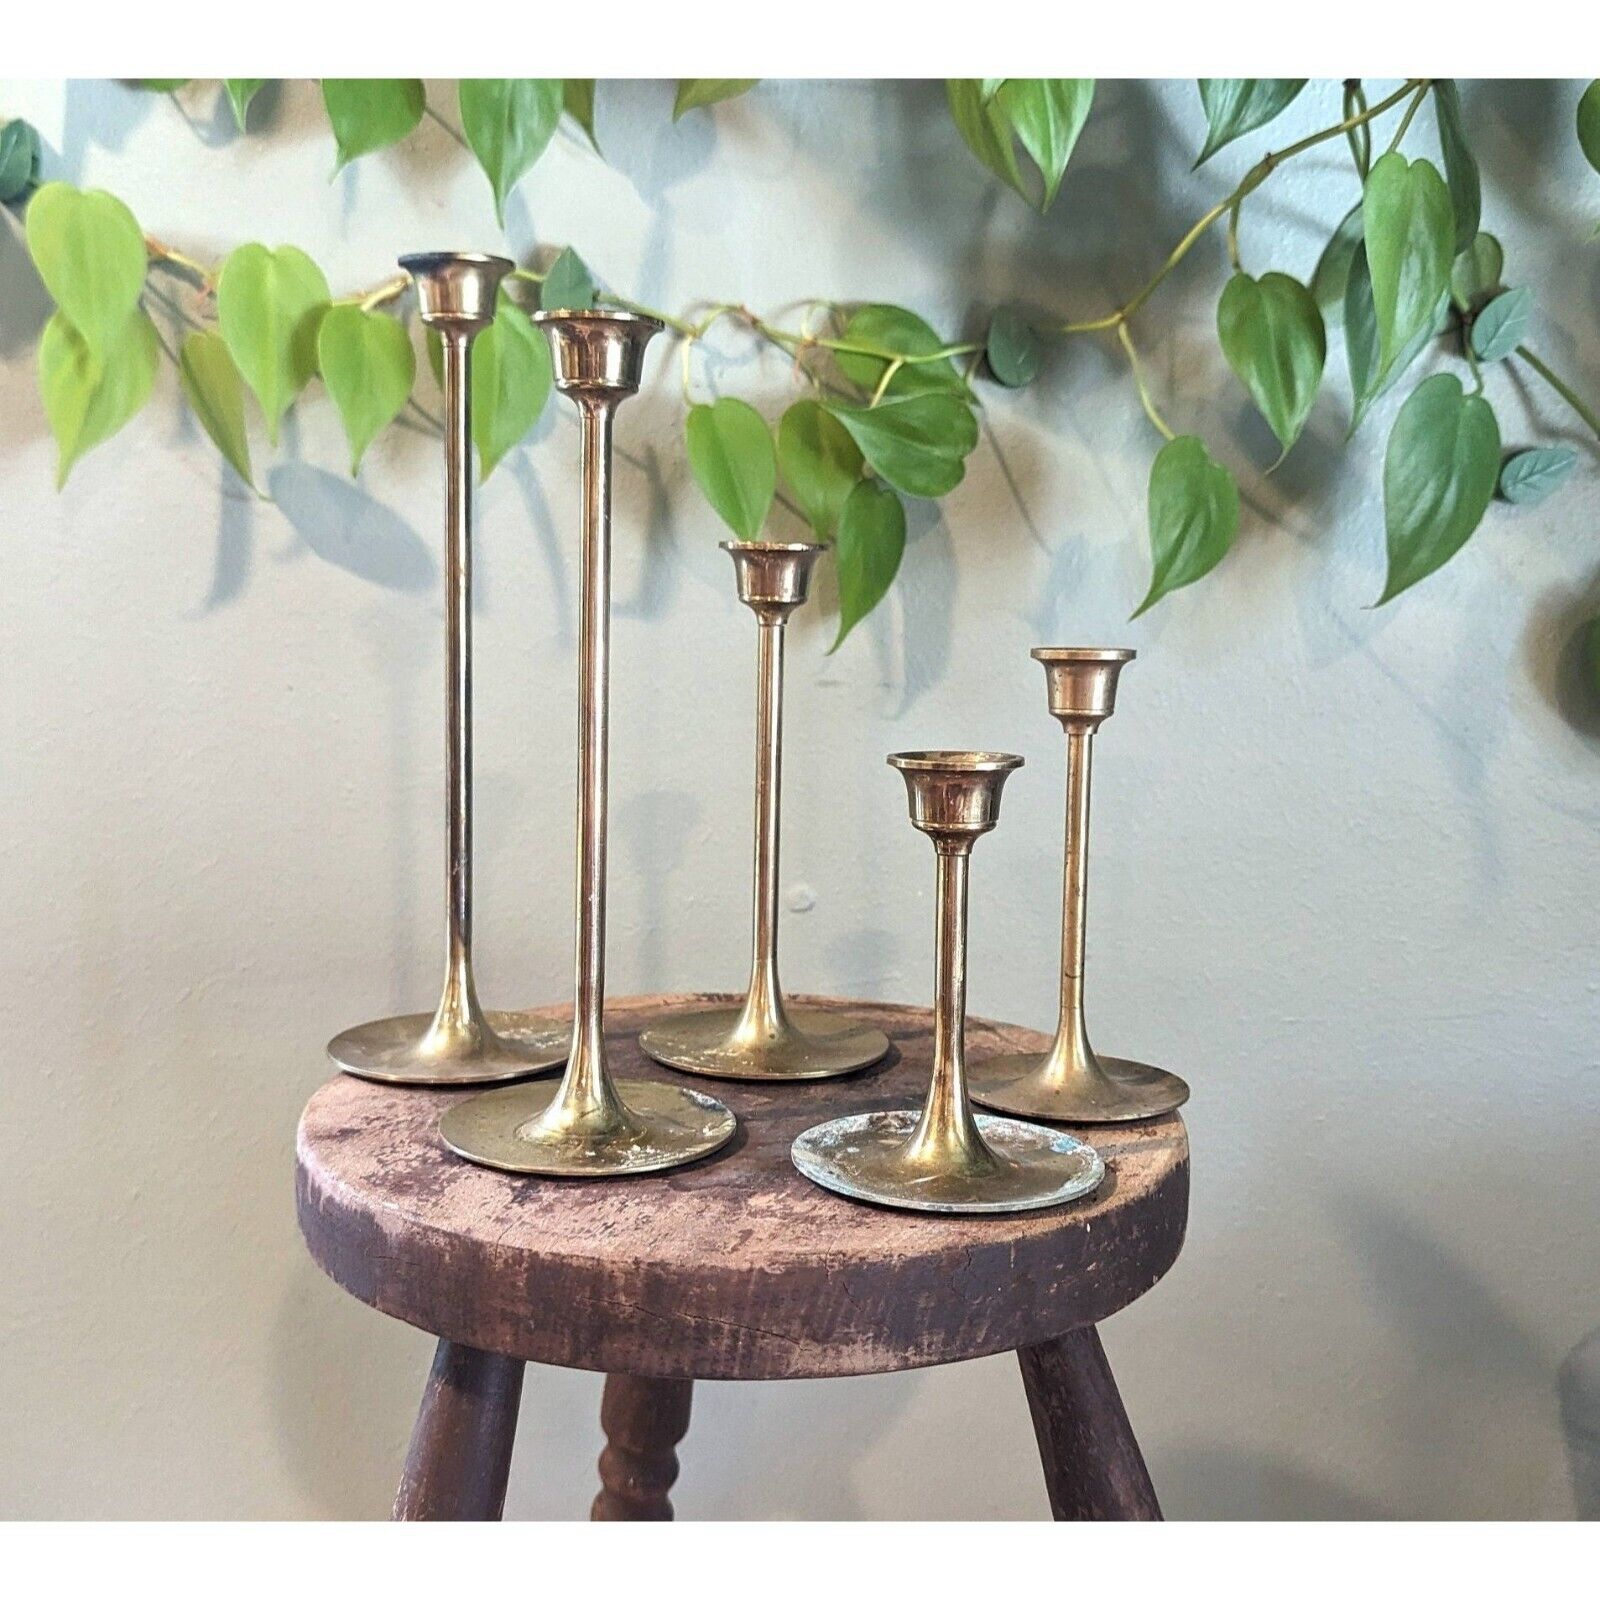 Set of 5 Vintage Brass Candlestick Holders Holder Tapering Tapered Minimal Gift